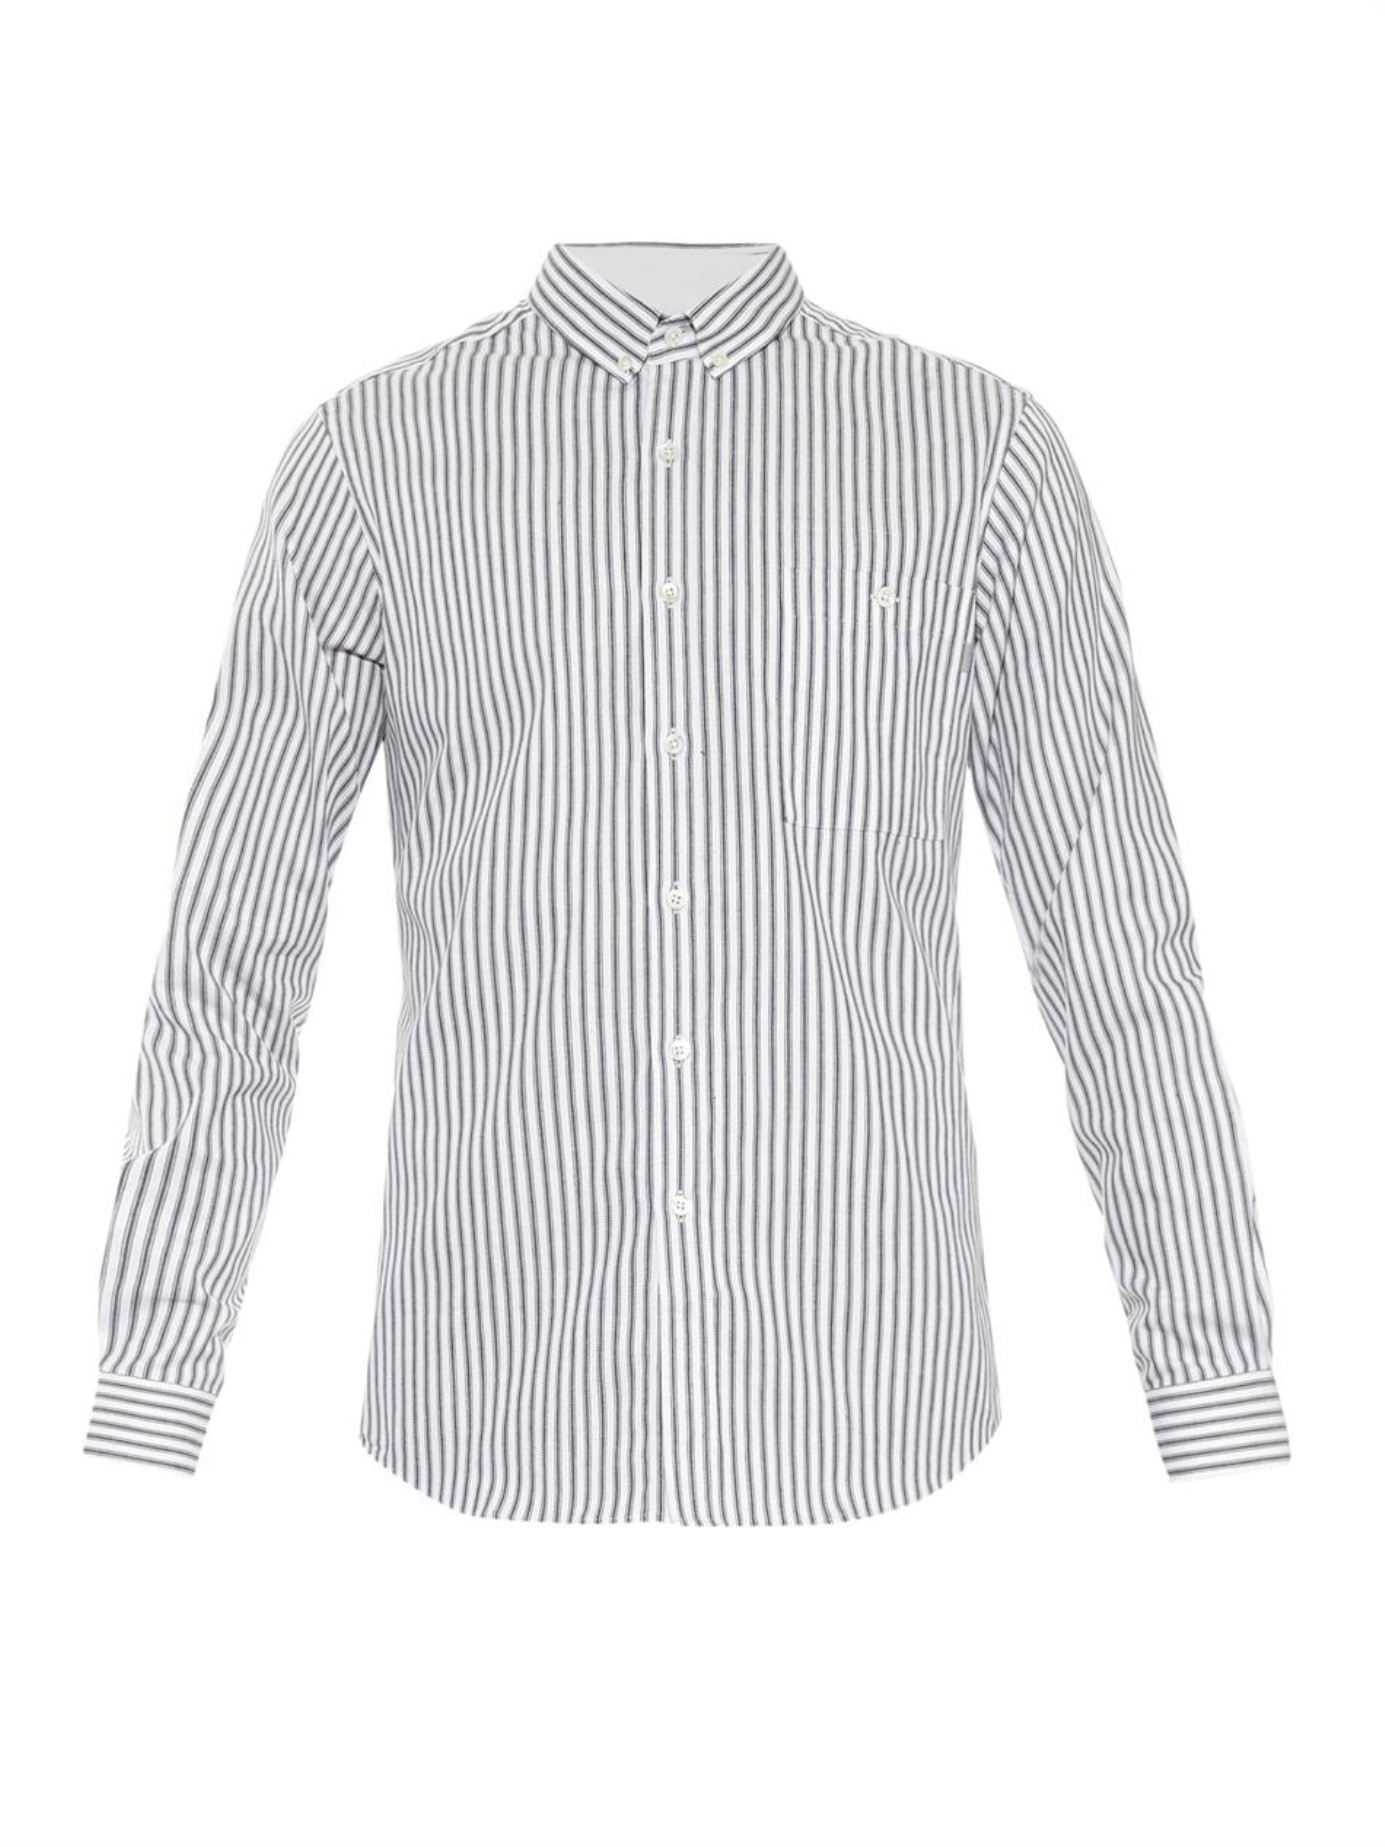 Patrik ervell Ticking-Stripe Cotton-Twill Shirt in Gray for Men | Lyst